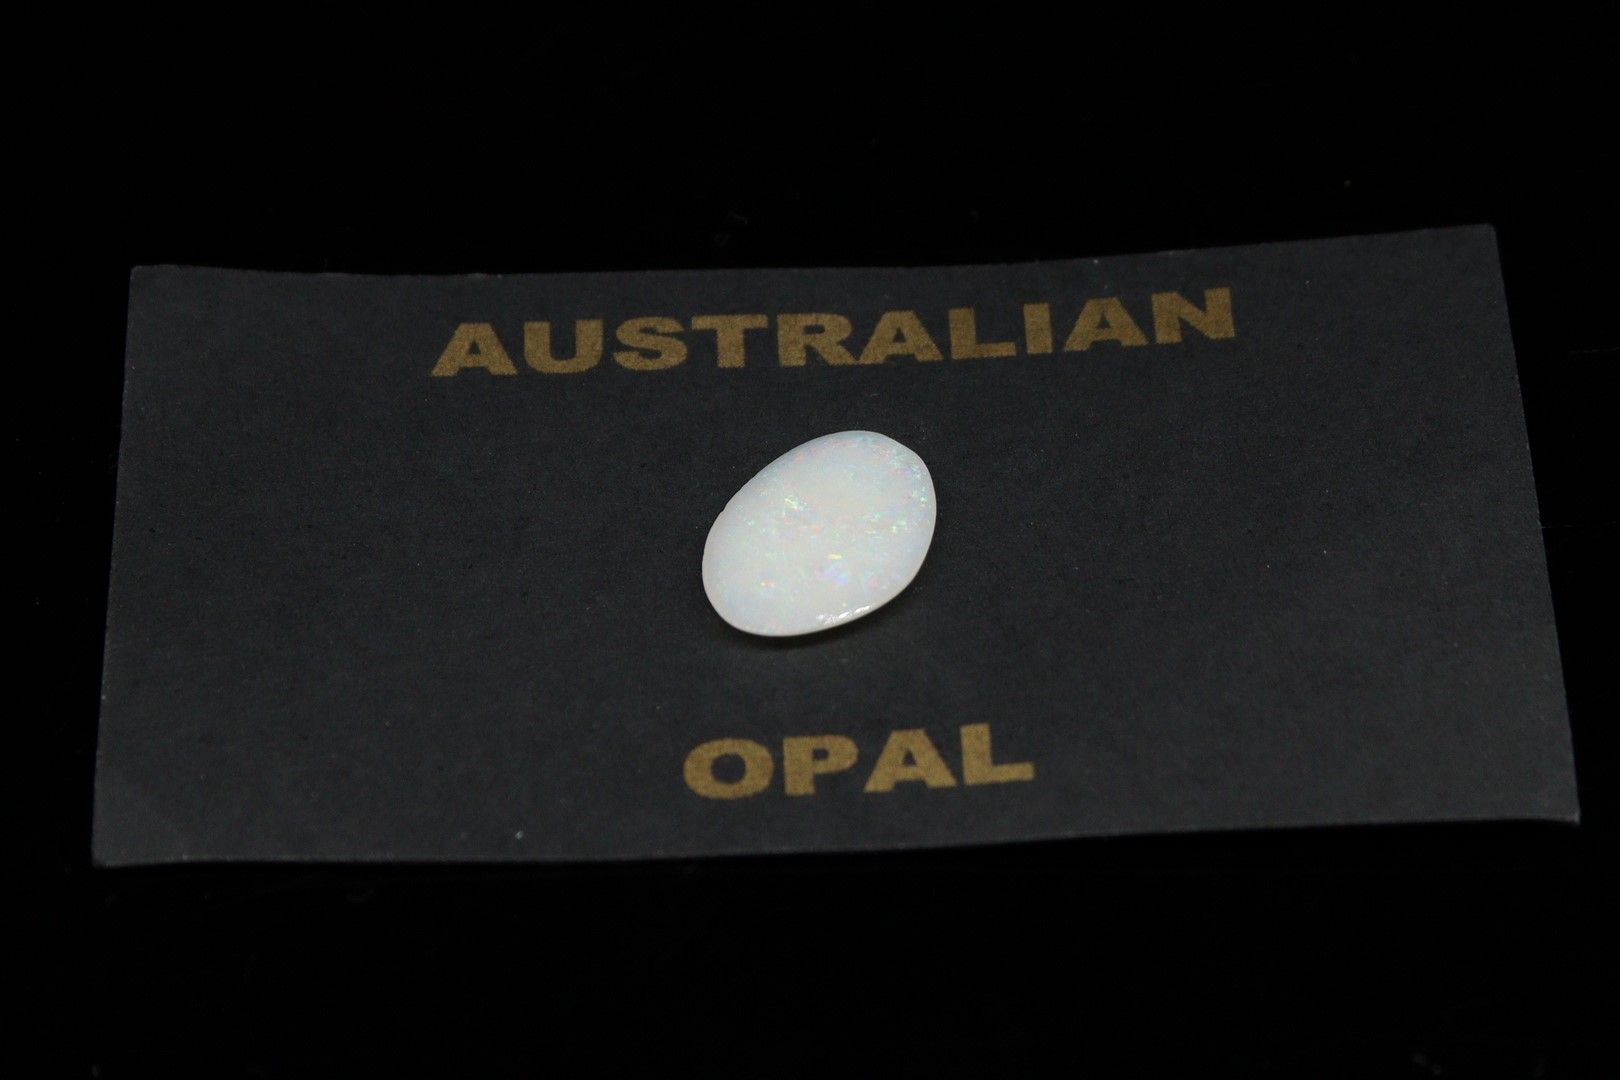 Null Opale bianco su carta. 

Peso: 1,85 carati.